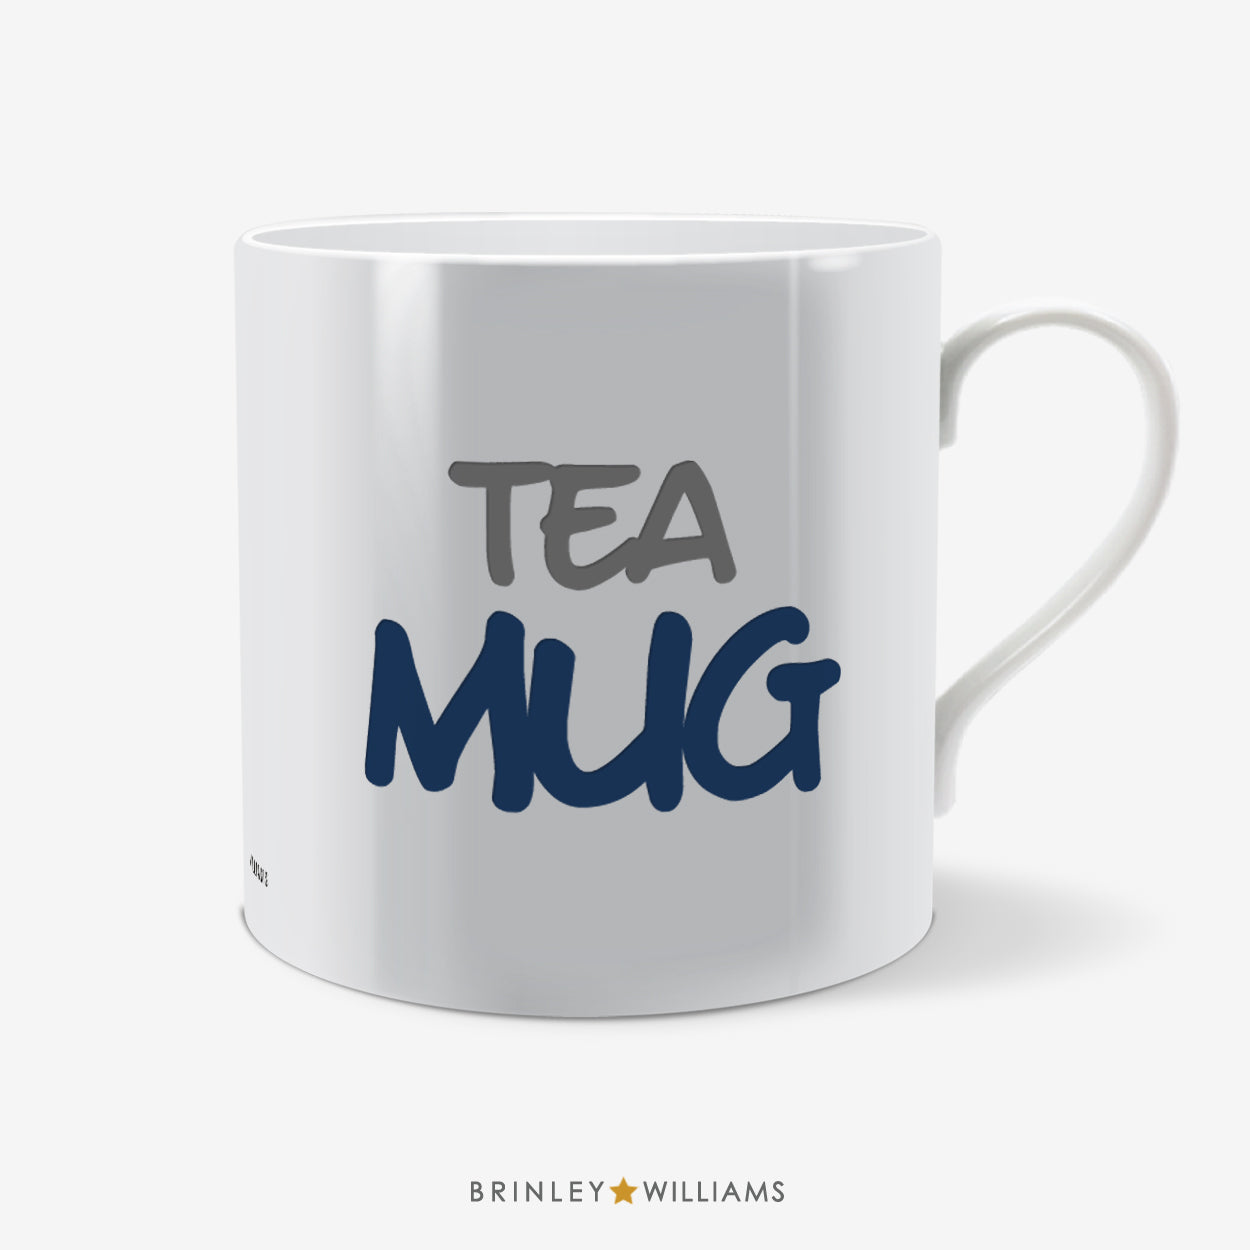 Tea Mug Fun Mug - Navy